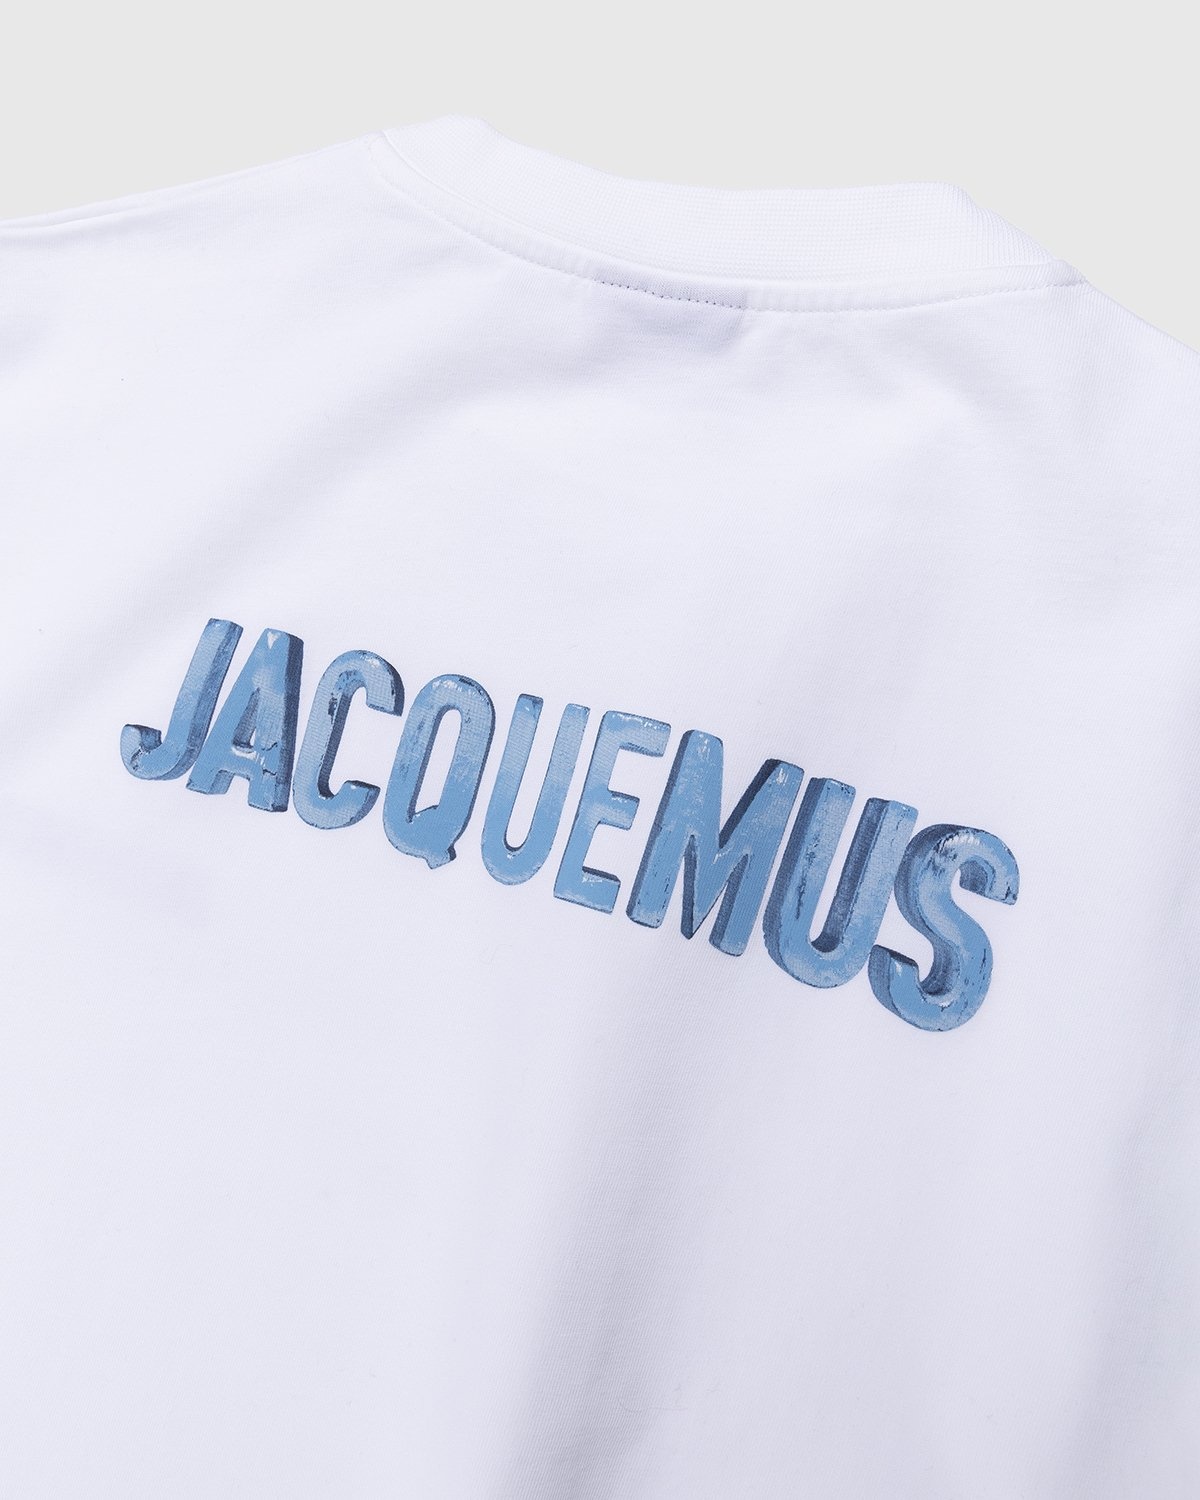 JACQUEMUS – Le T-Shirt Gelo Print Ice Jacquemus White | Highsnobiety Shop